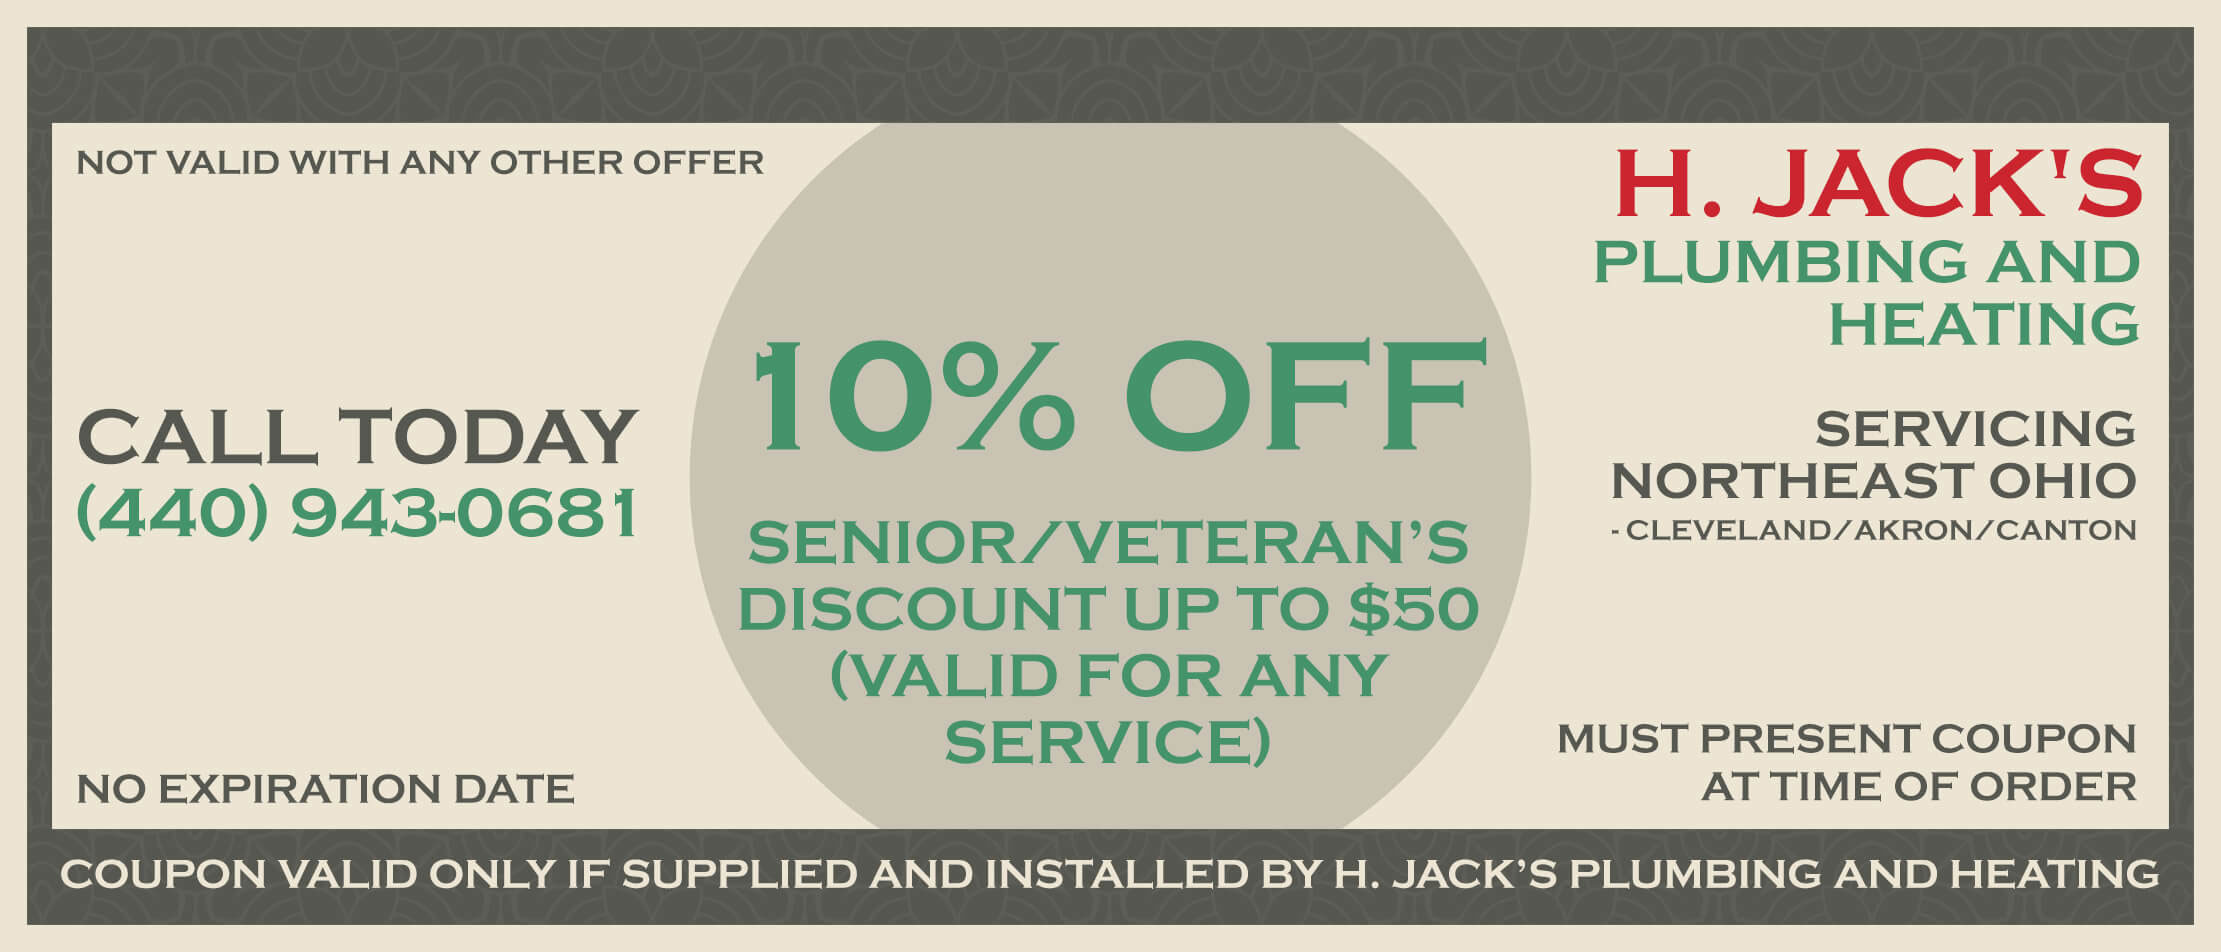 10% Off Senior and Veterans Discount